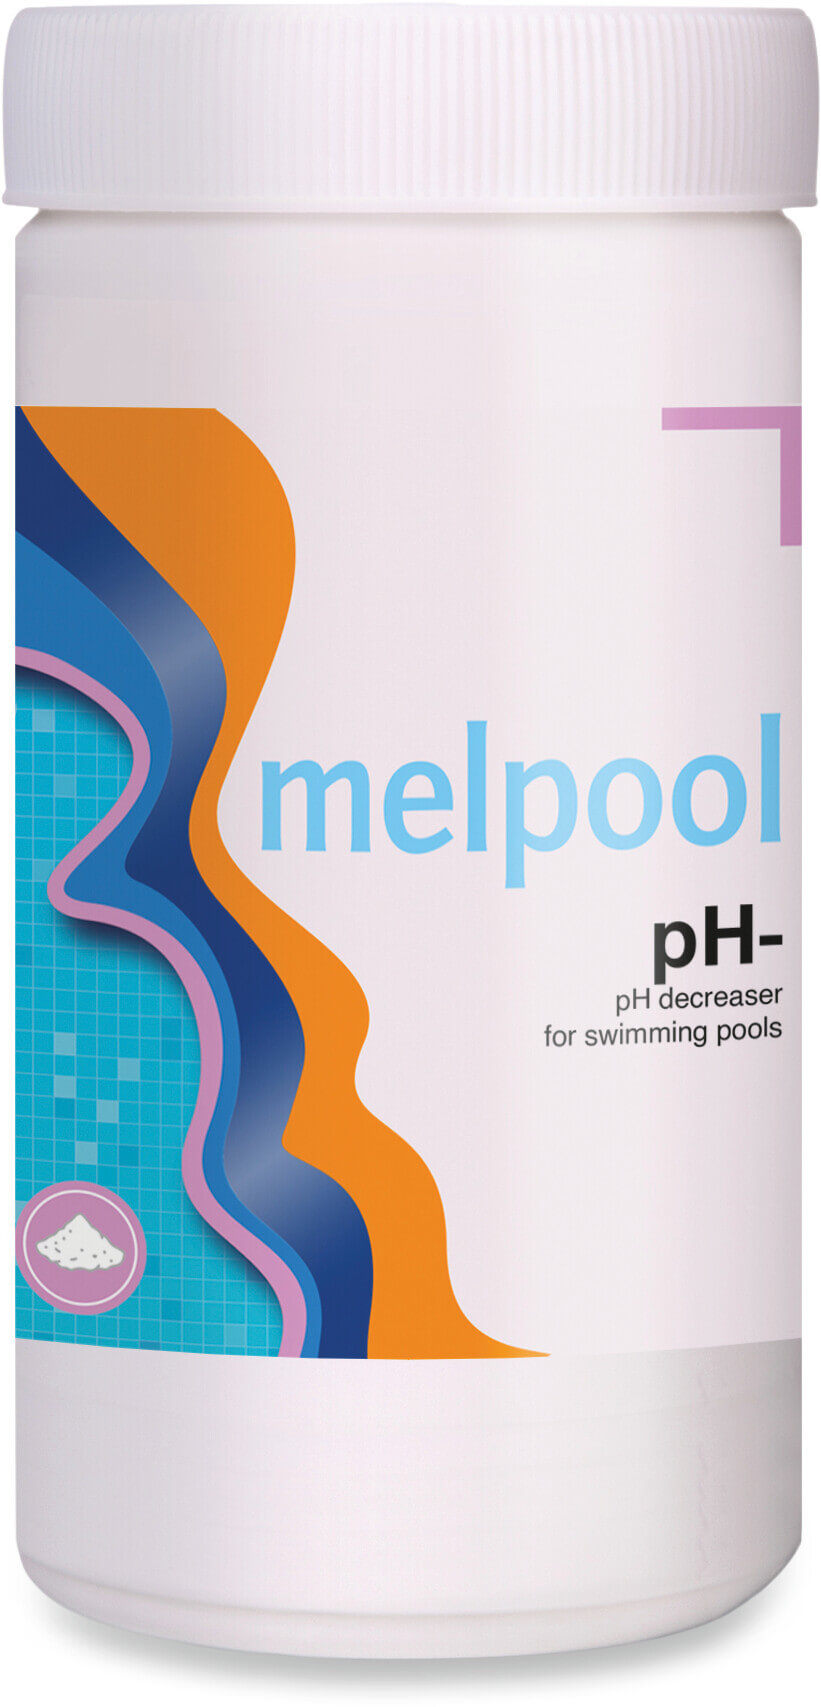 Melpool pH- Sodium bisuphate to decrease pH 15000g